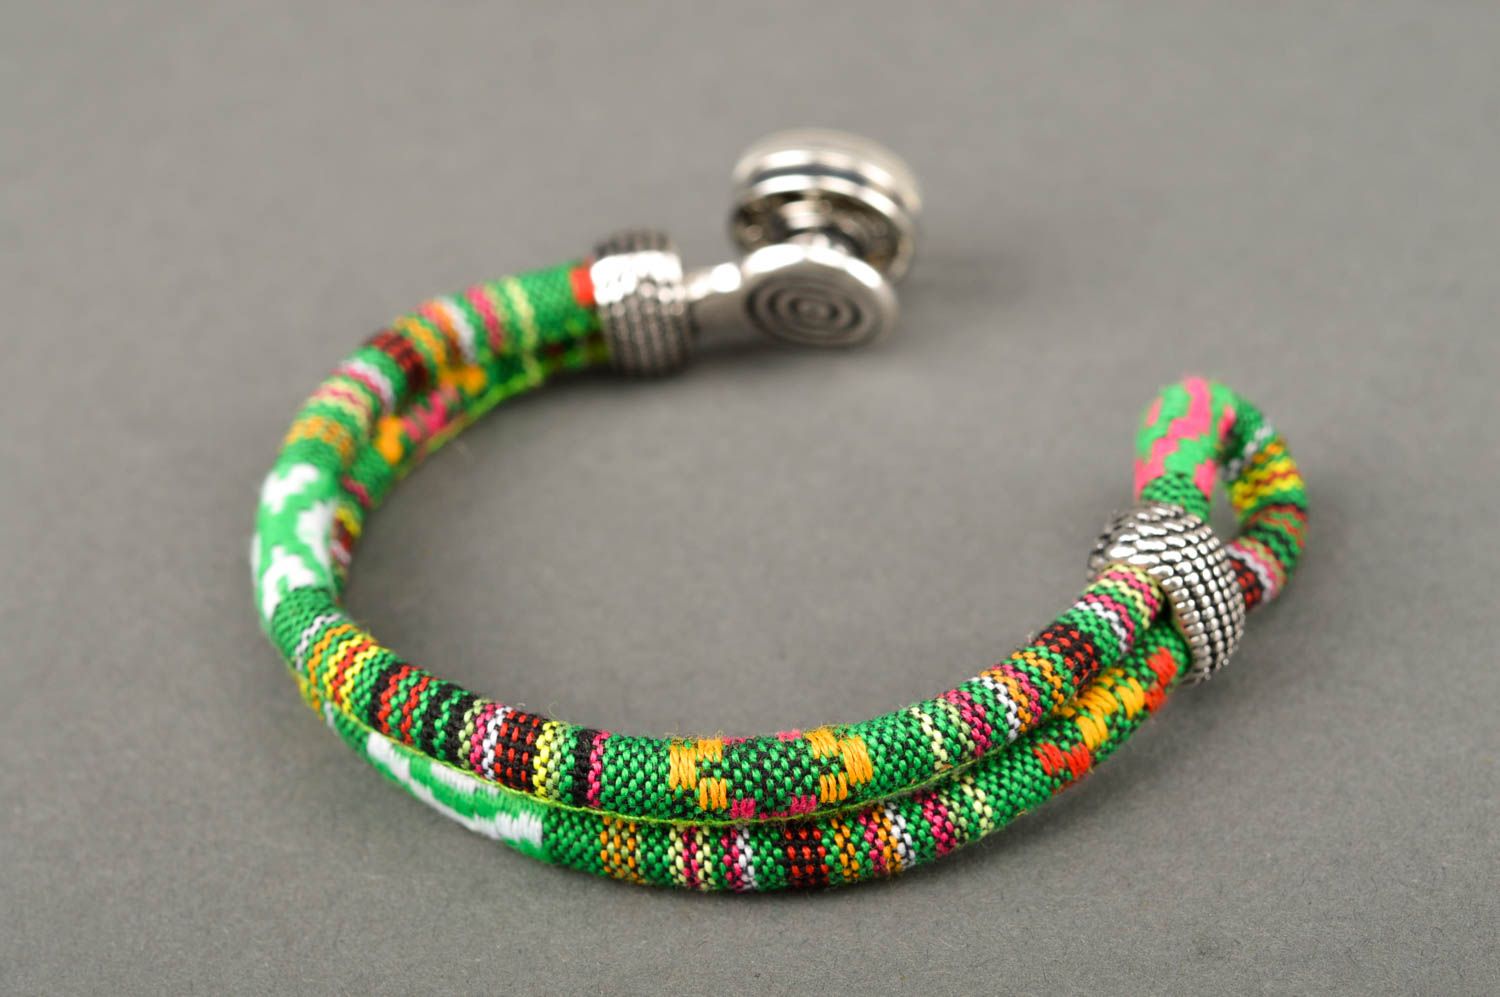 Handmade jewelry designer bracelet wrist bracelet gifts for girls cool jewelry photo 4